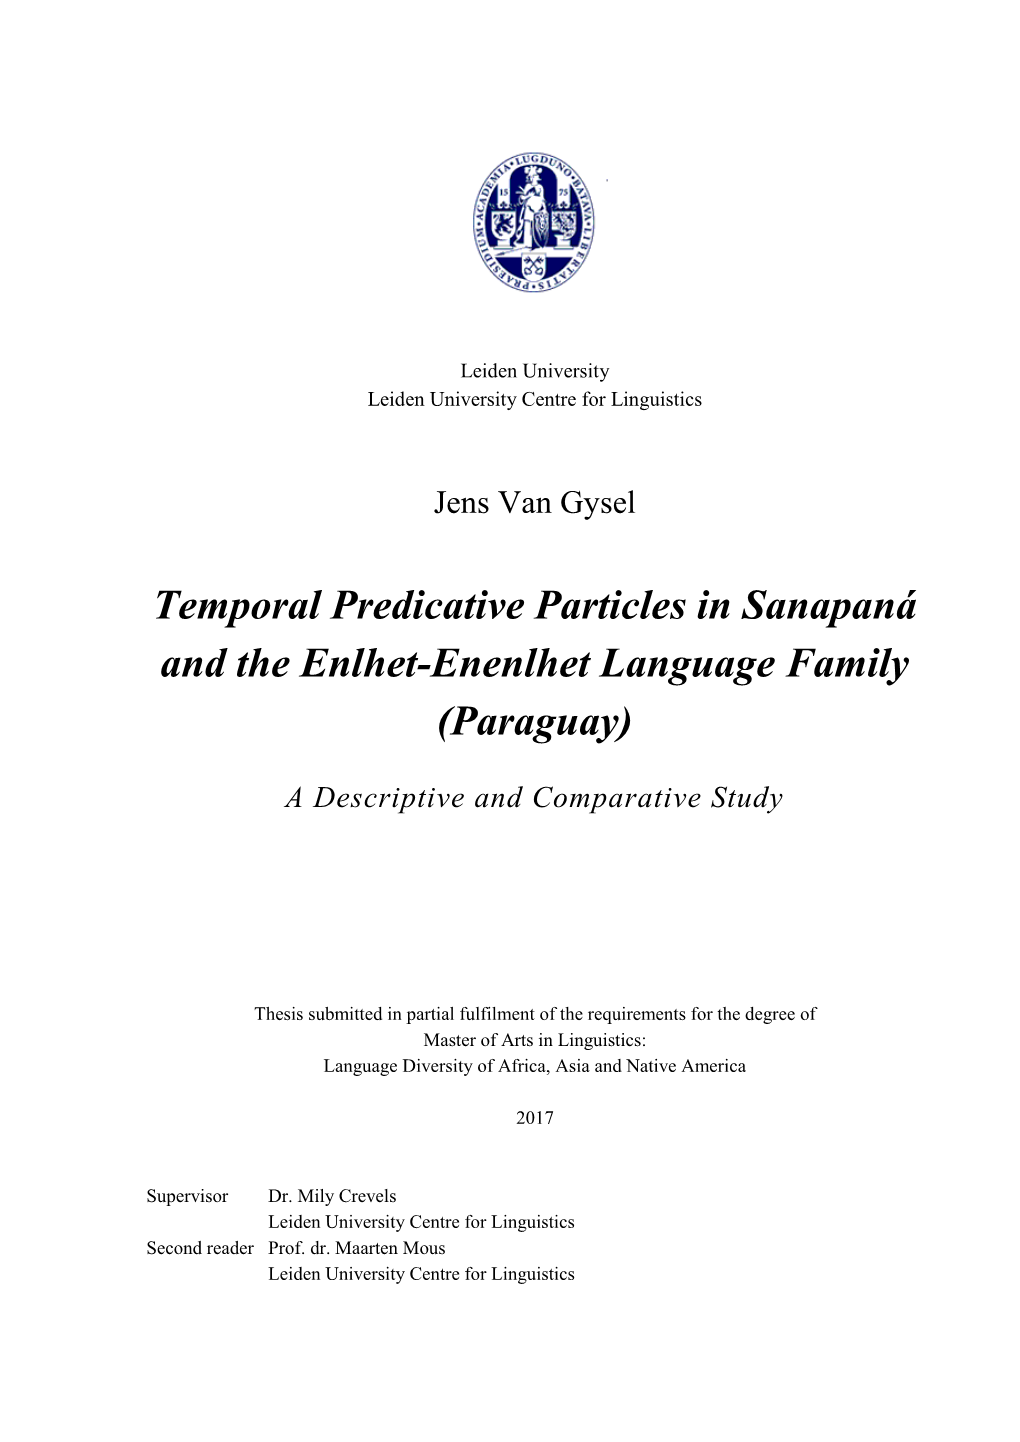 Temporal Predicative Particles in Sanapaná and the Enlhet-Enenlhet Language Family (Paraguay)